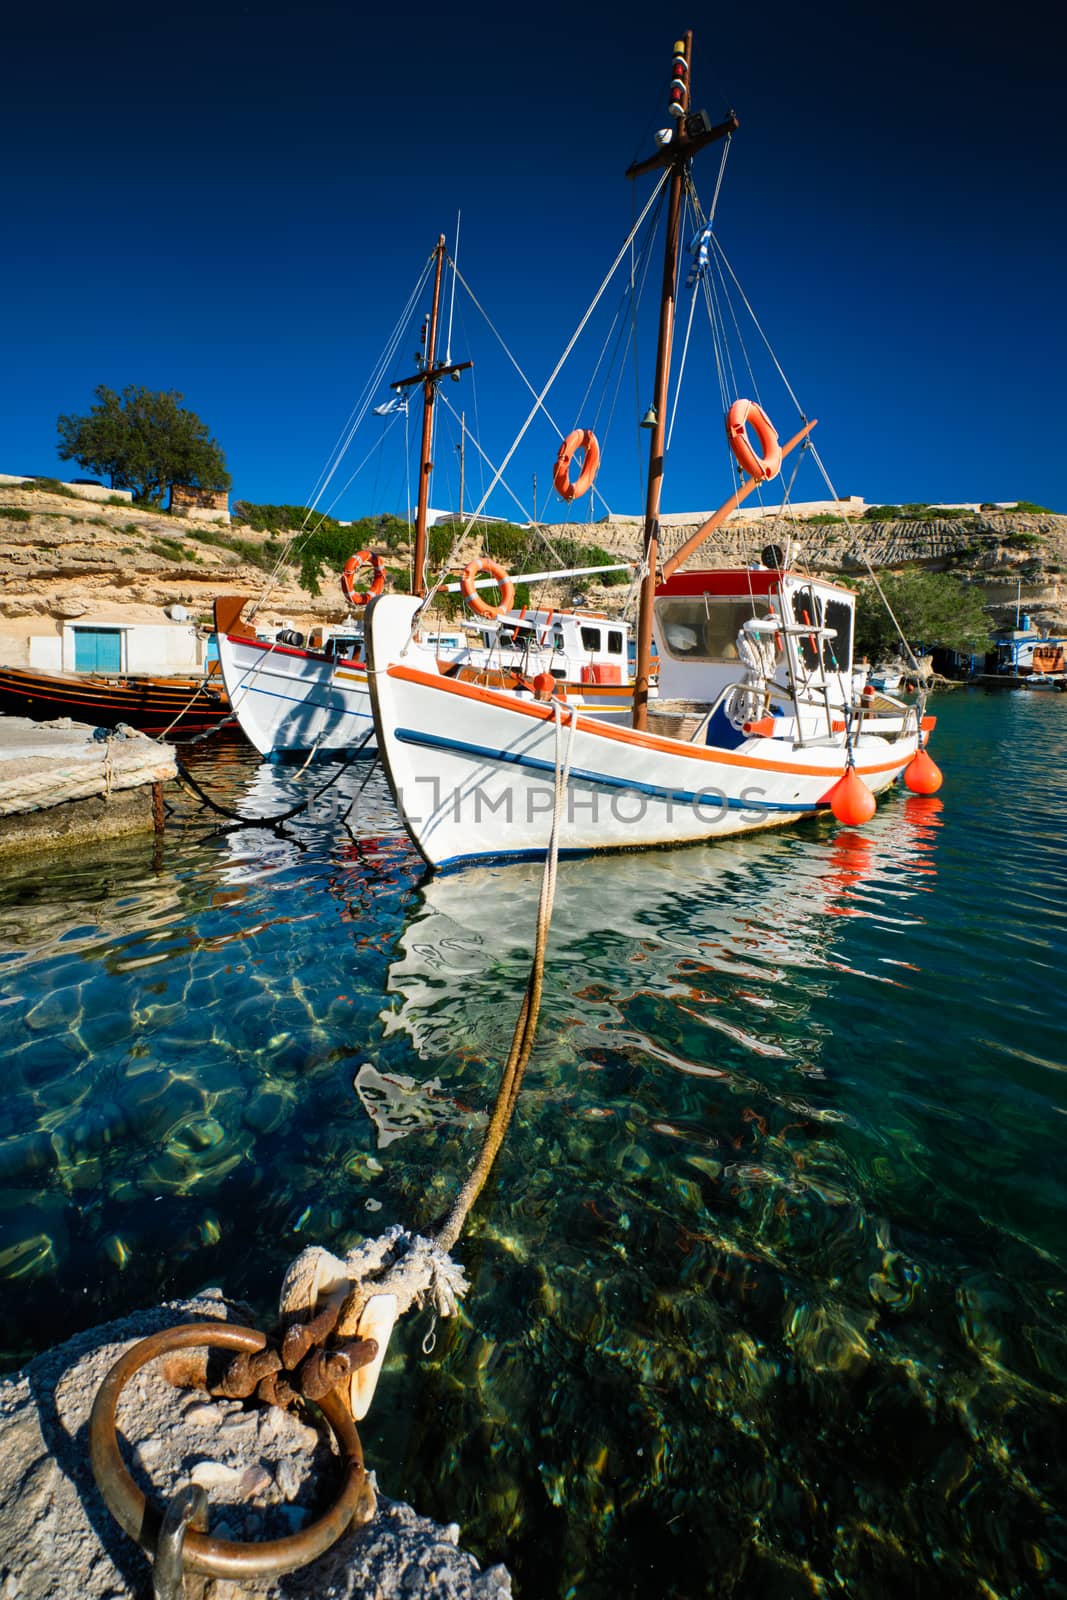 Fishing boats in harbour in fishing village of Mandrakia, Milos island, Greece by dimol